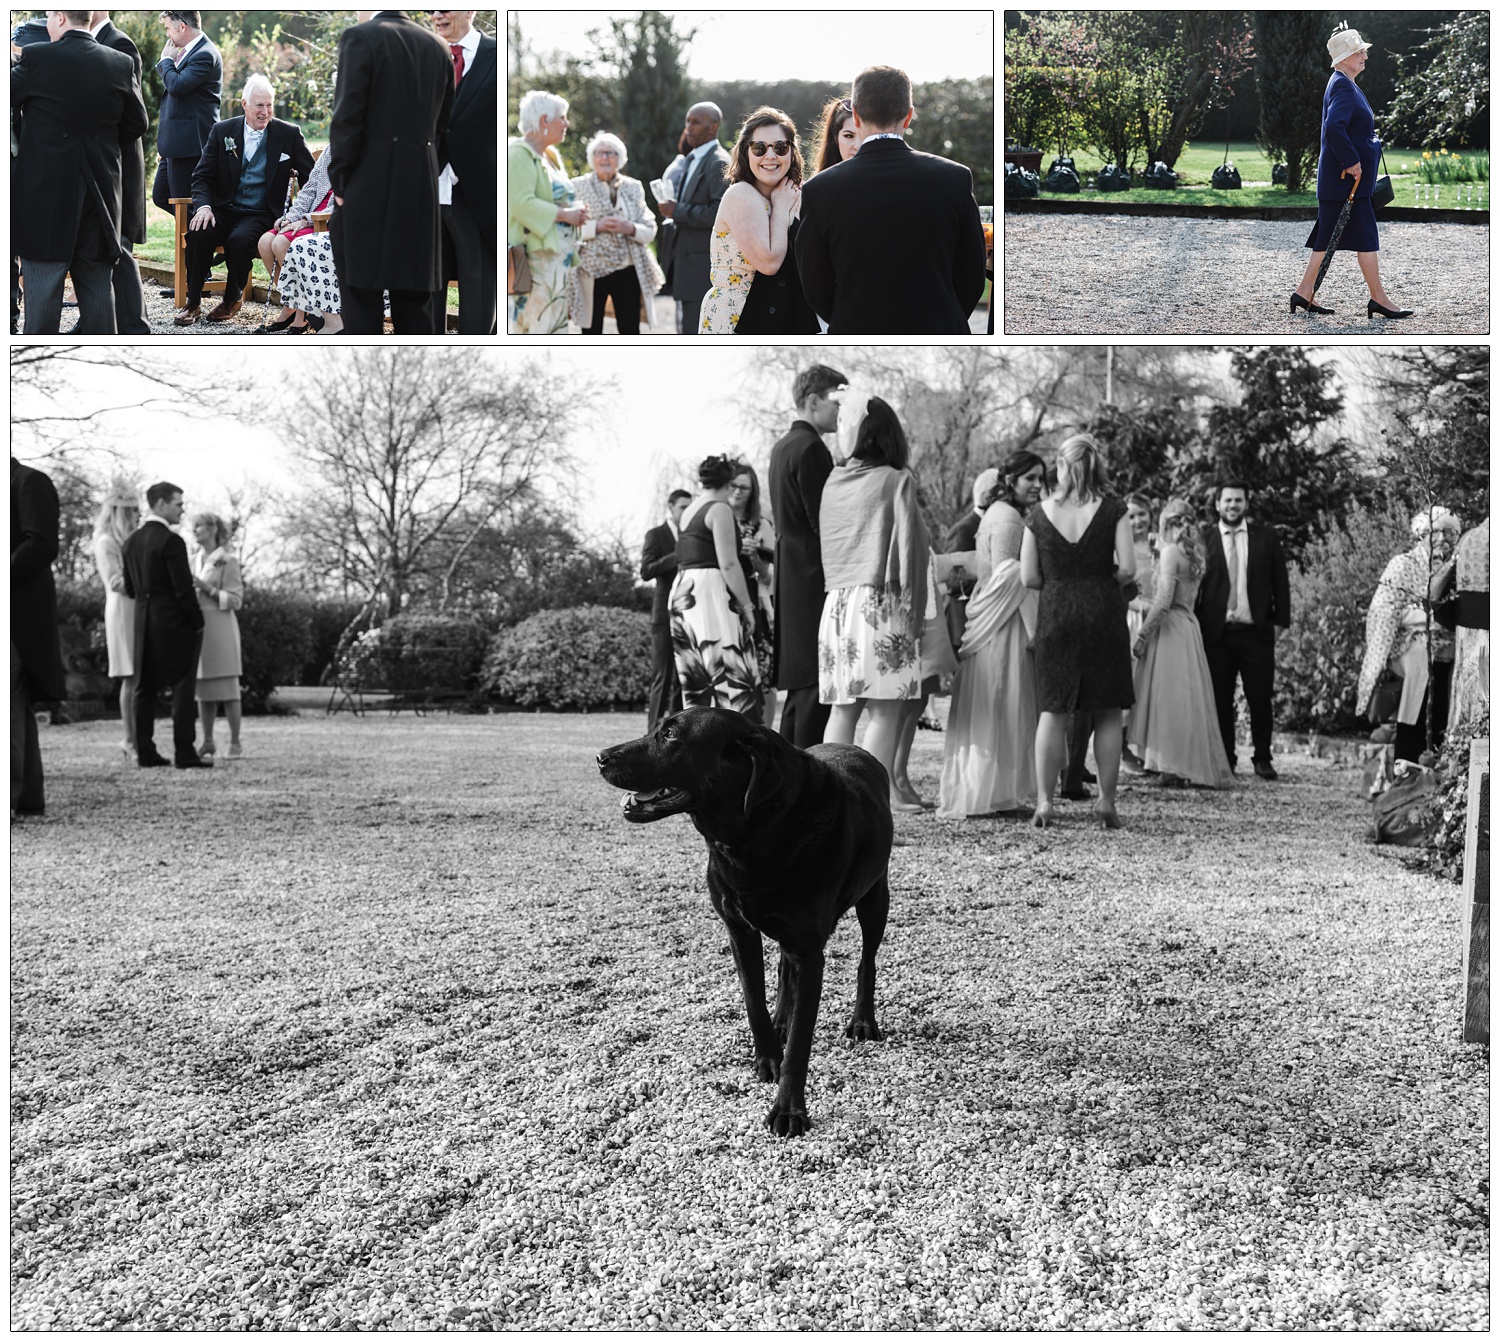 Black labrador walking on gravel, wedding guests chat inthe background